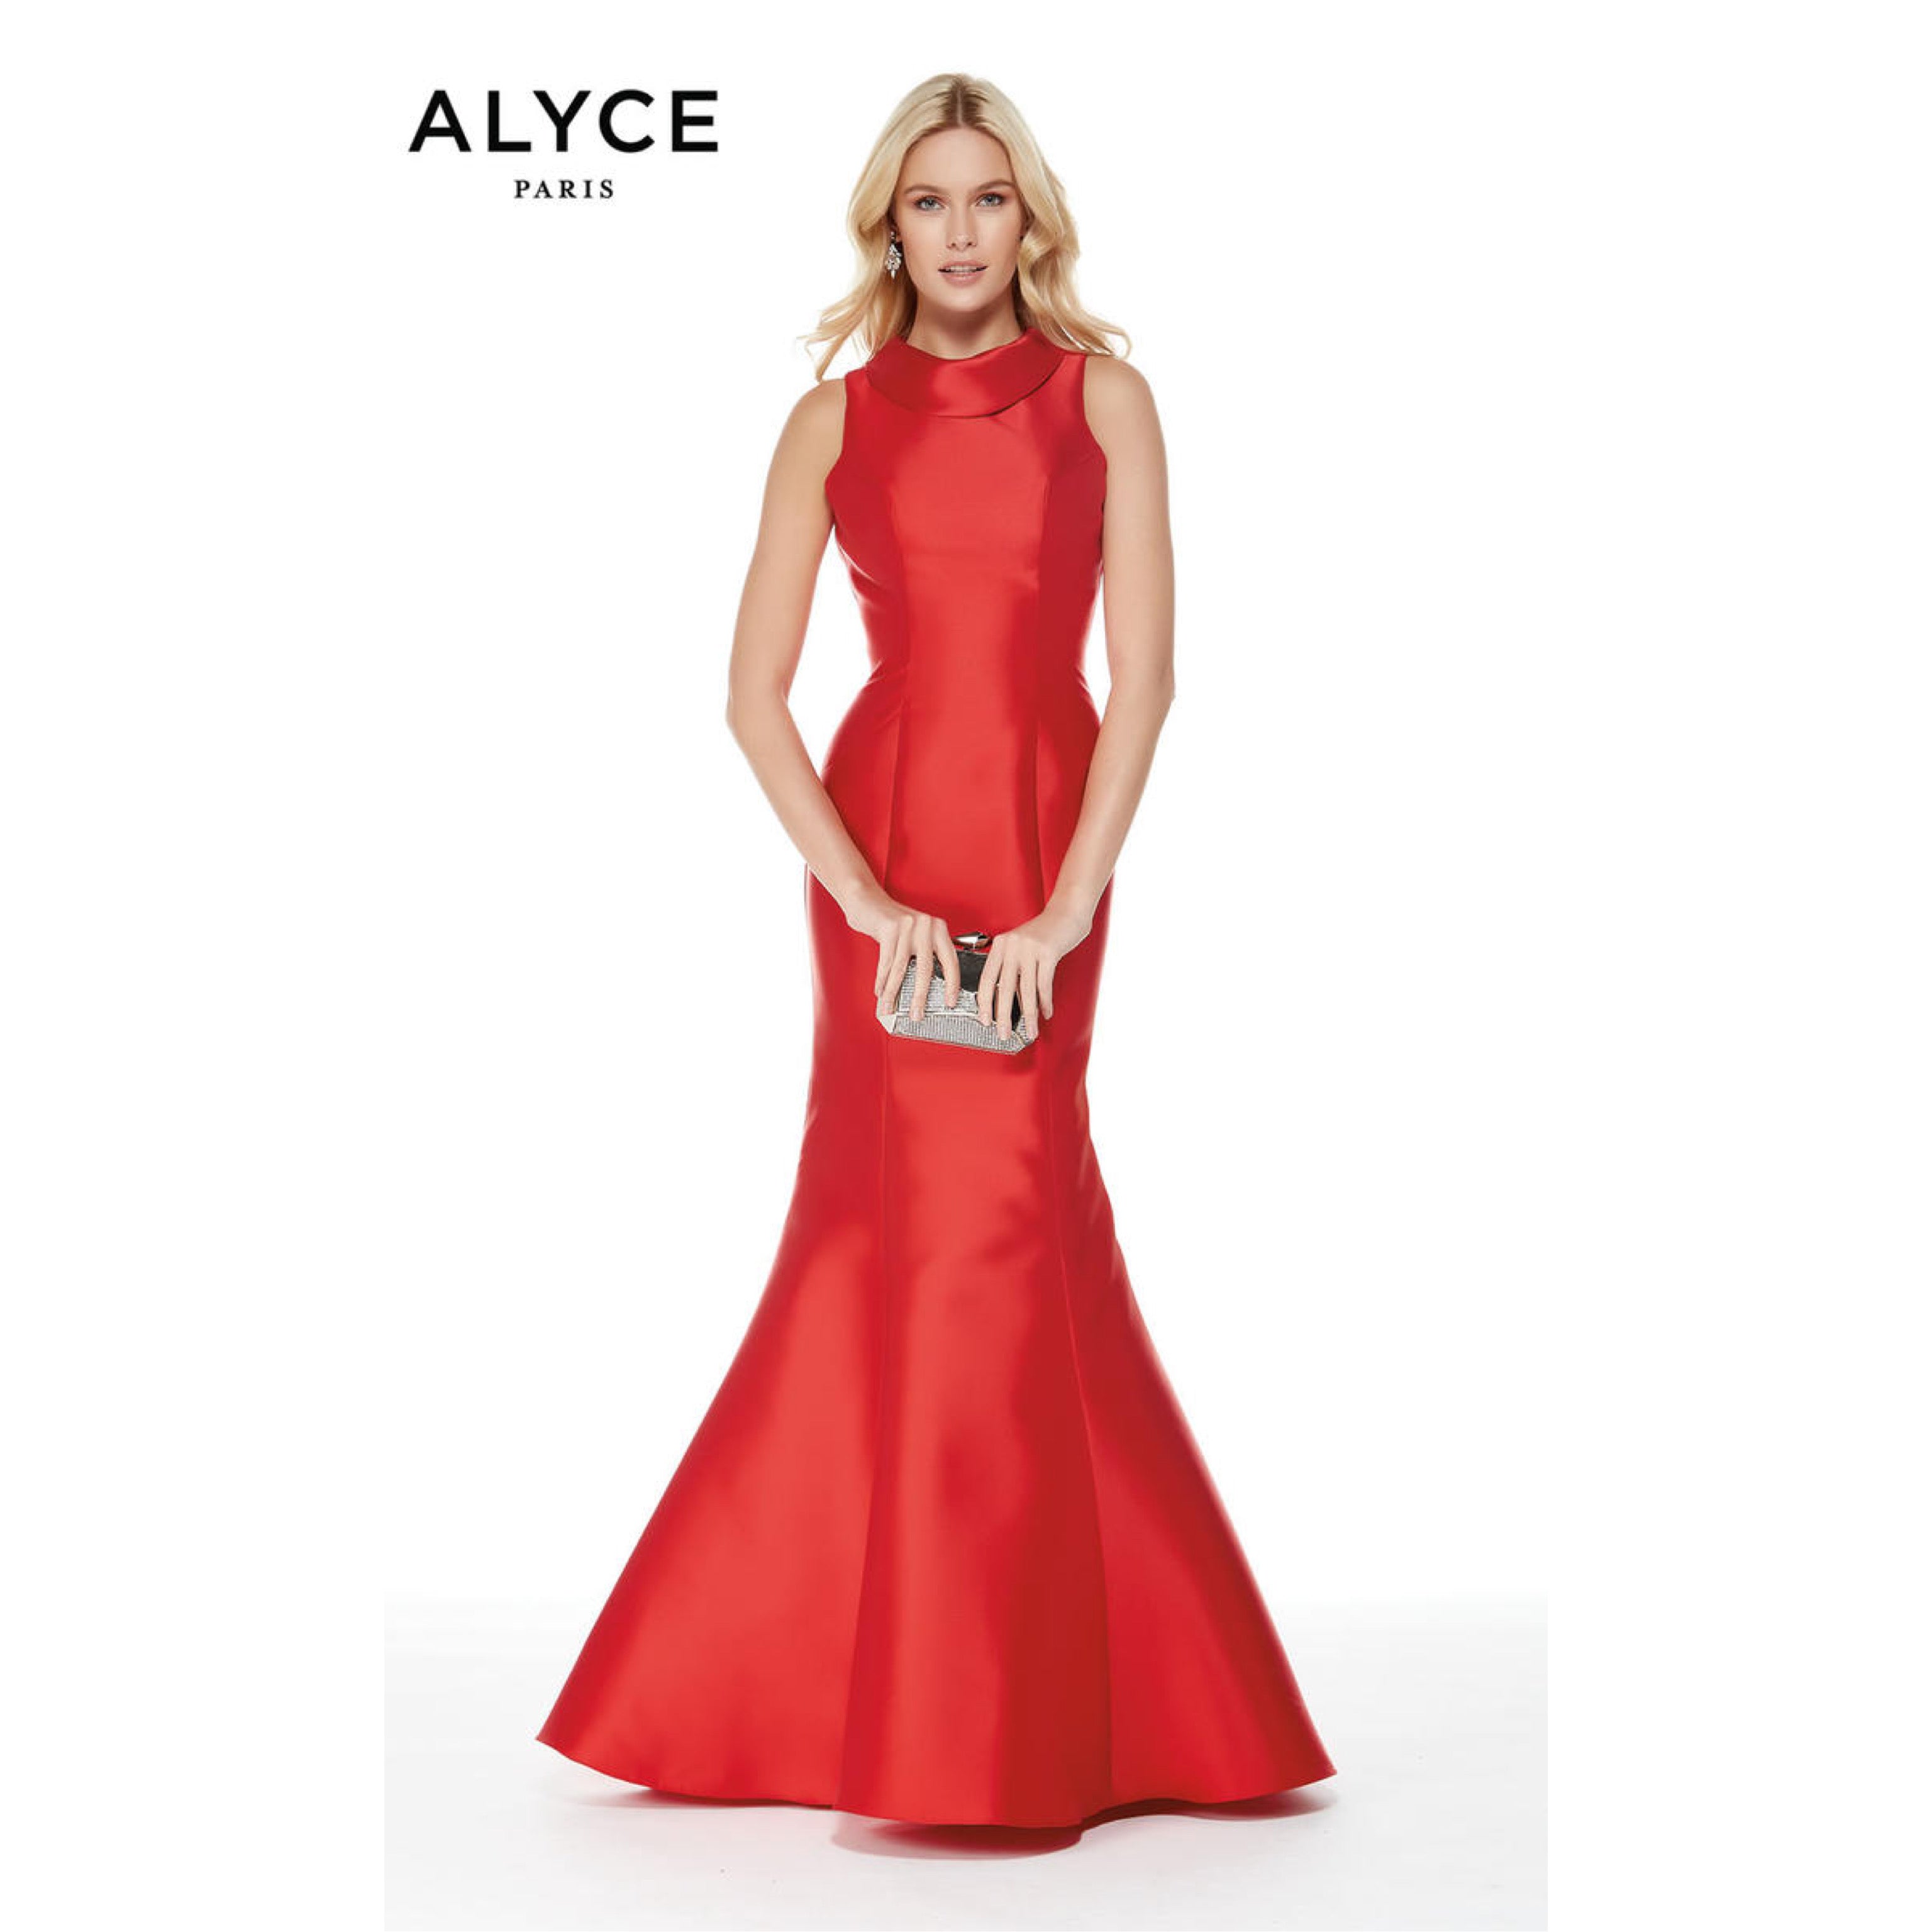 Alyce red dress, size 18